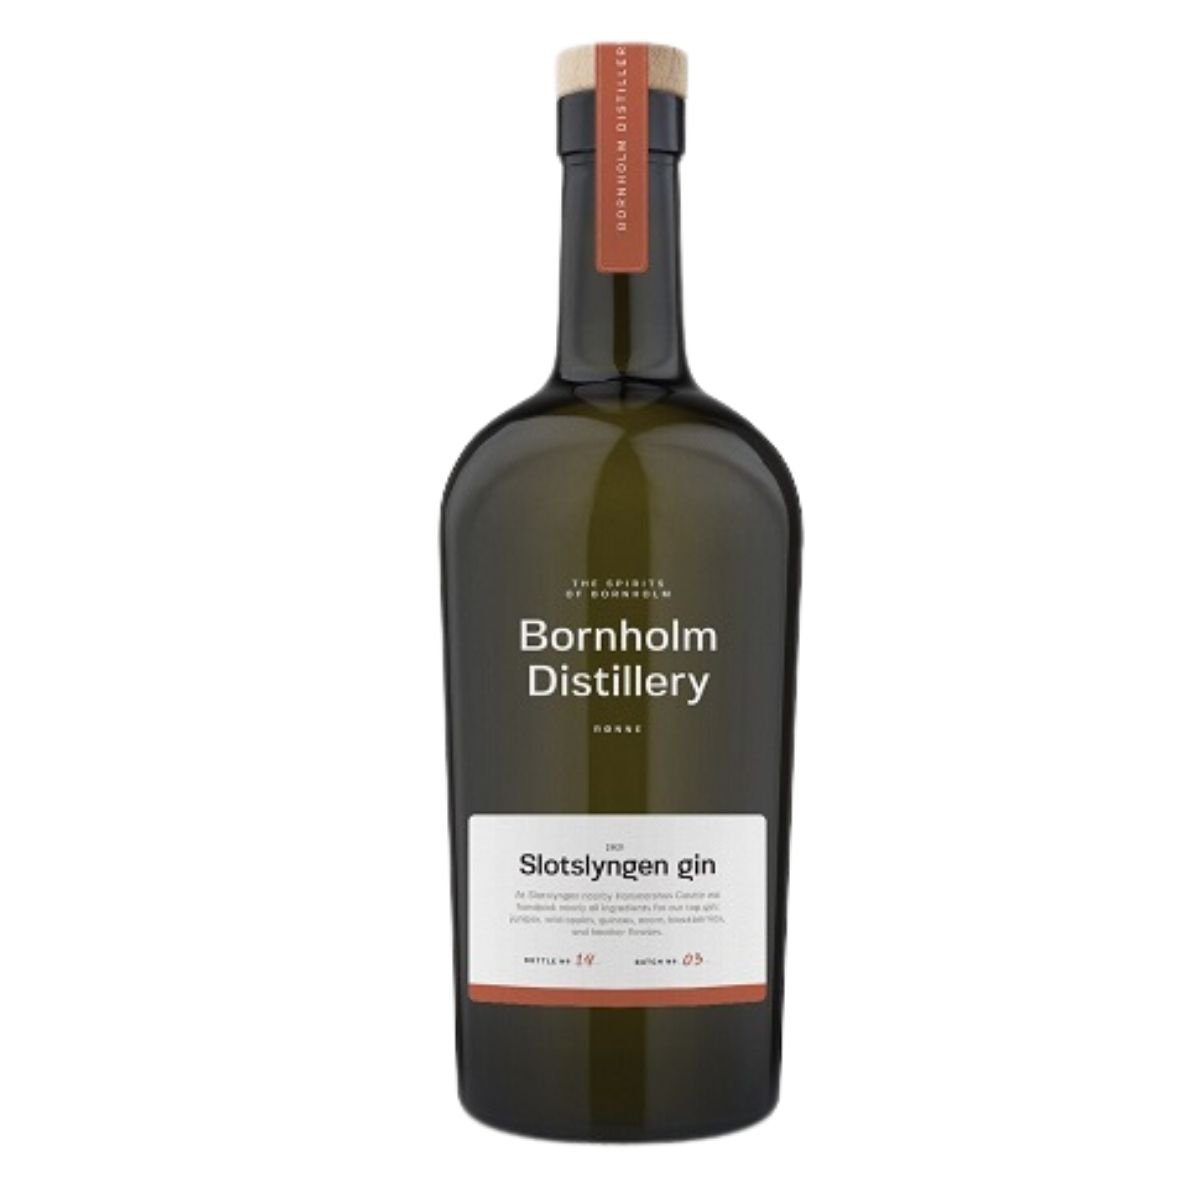 BORNHOLMER Bornholm Distillery, Slotslyngen Gin